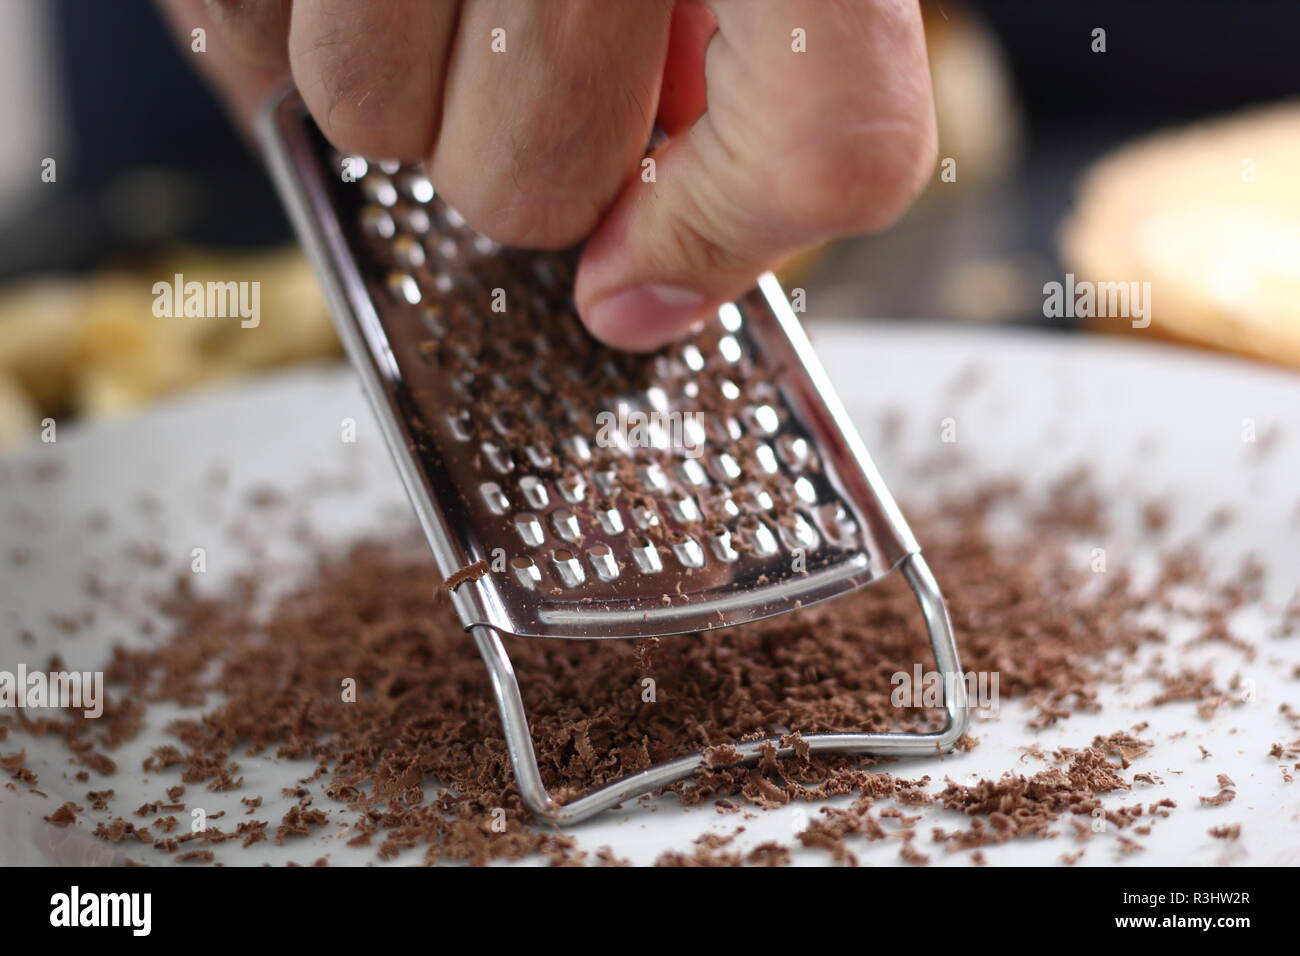 https://c8.alamy.com/comp/R3HW2R/grate-chocolate-bar-using-handheld-grater-making-boston-banoffee-pie-R3HW2R.jpg